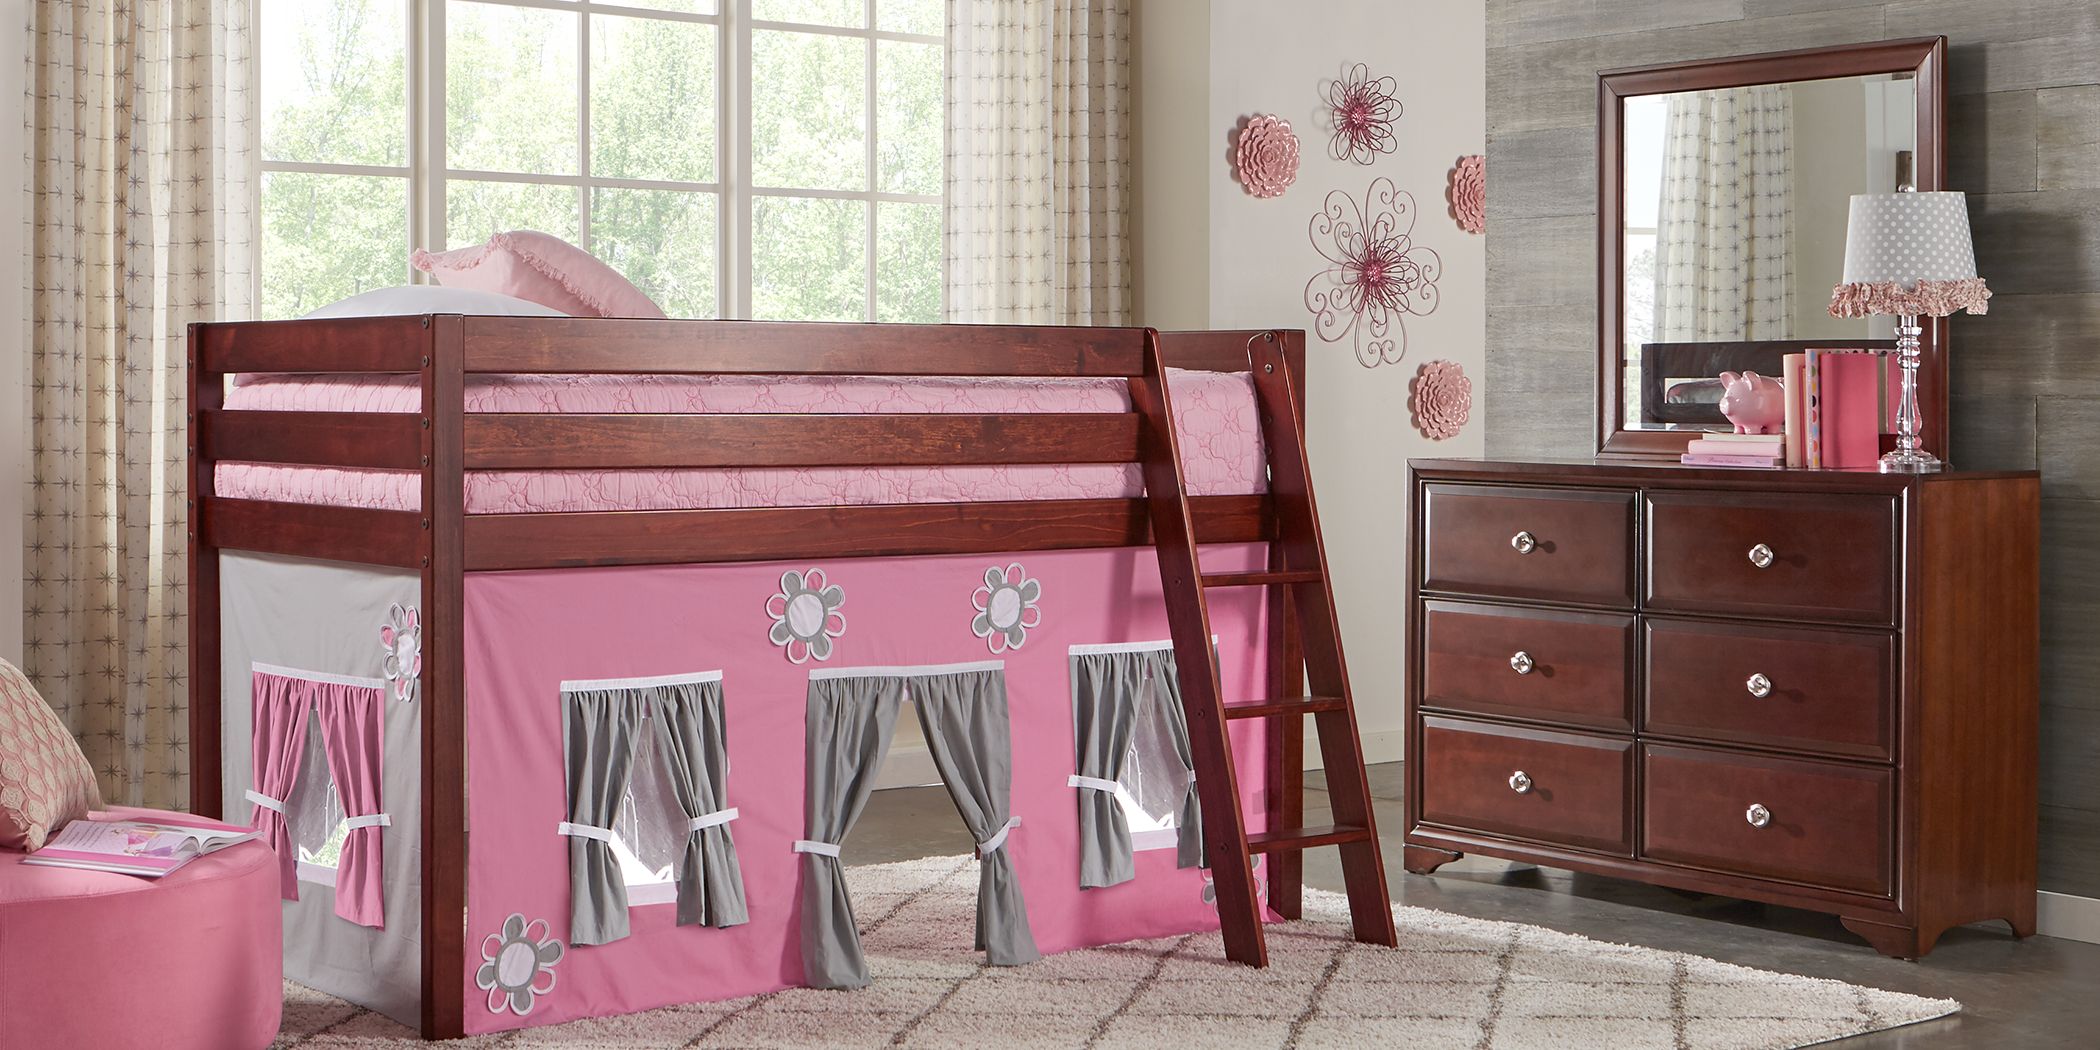 Pink Cottage Cherry Jr Tent Loft Bed, Rooms To Go Pink Cottage Loft Bed